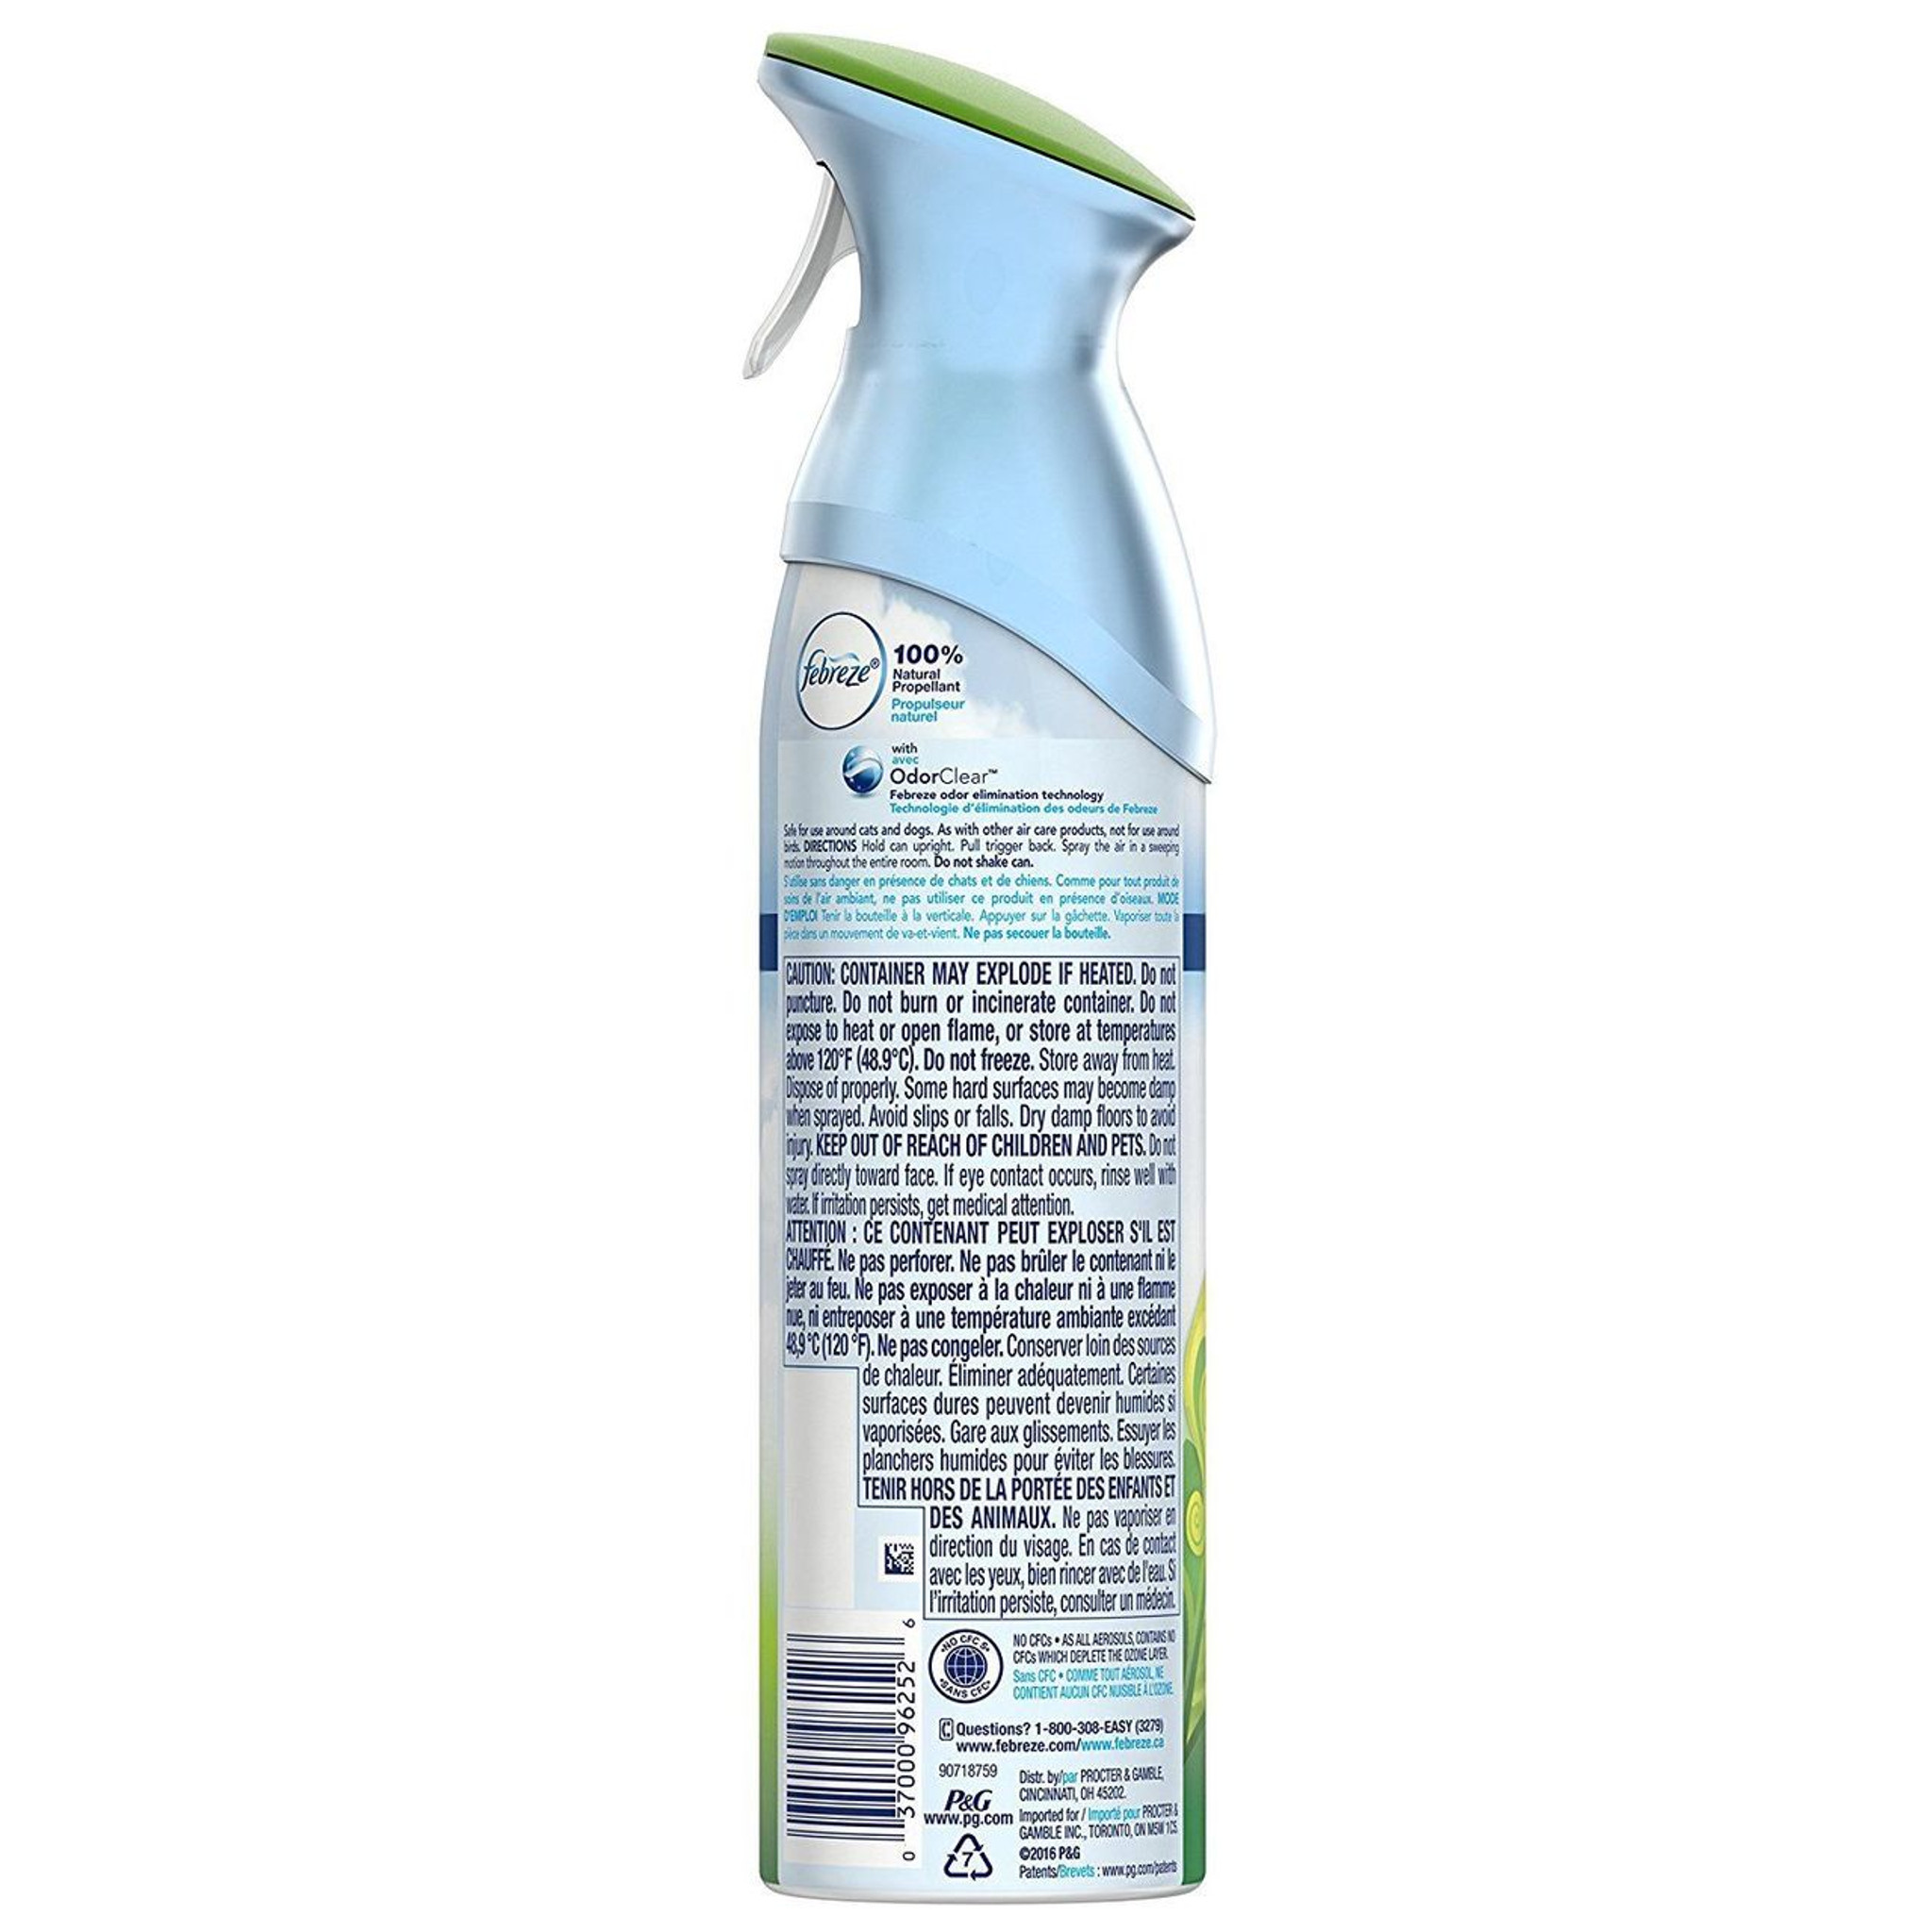 Febreze Air Freshener with Gain Scent, Original - 8.8 oz can